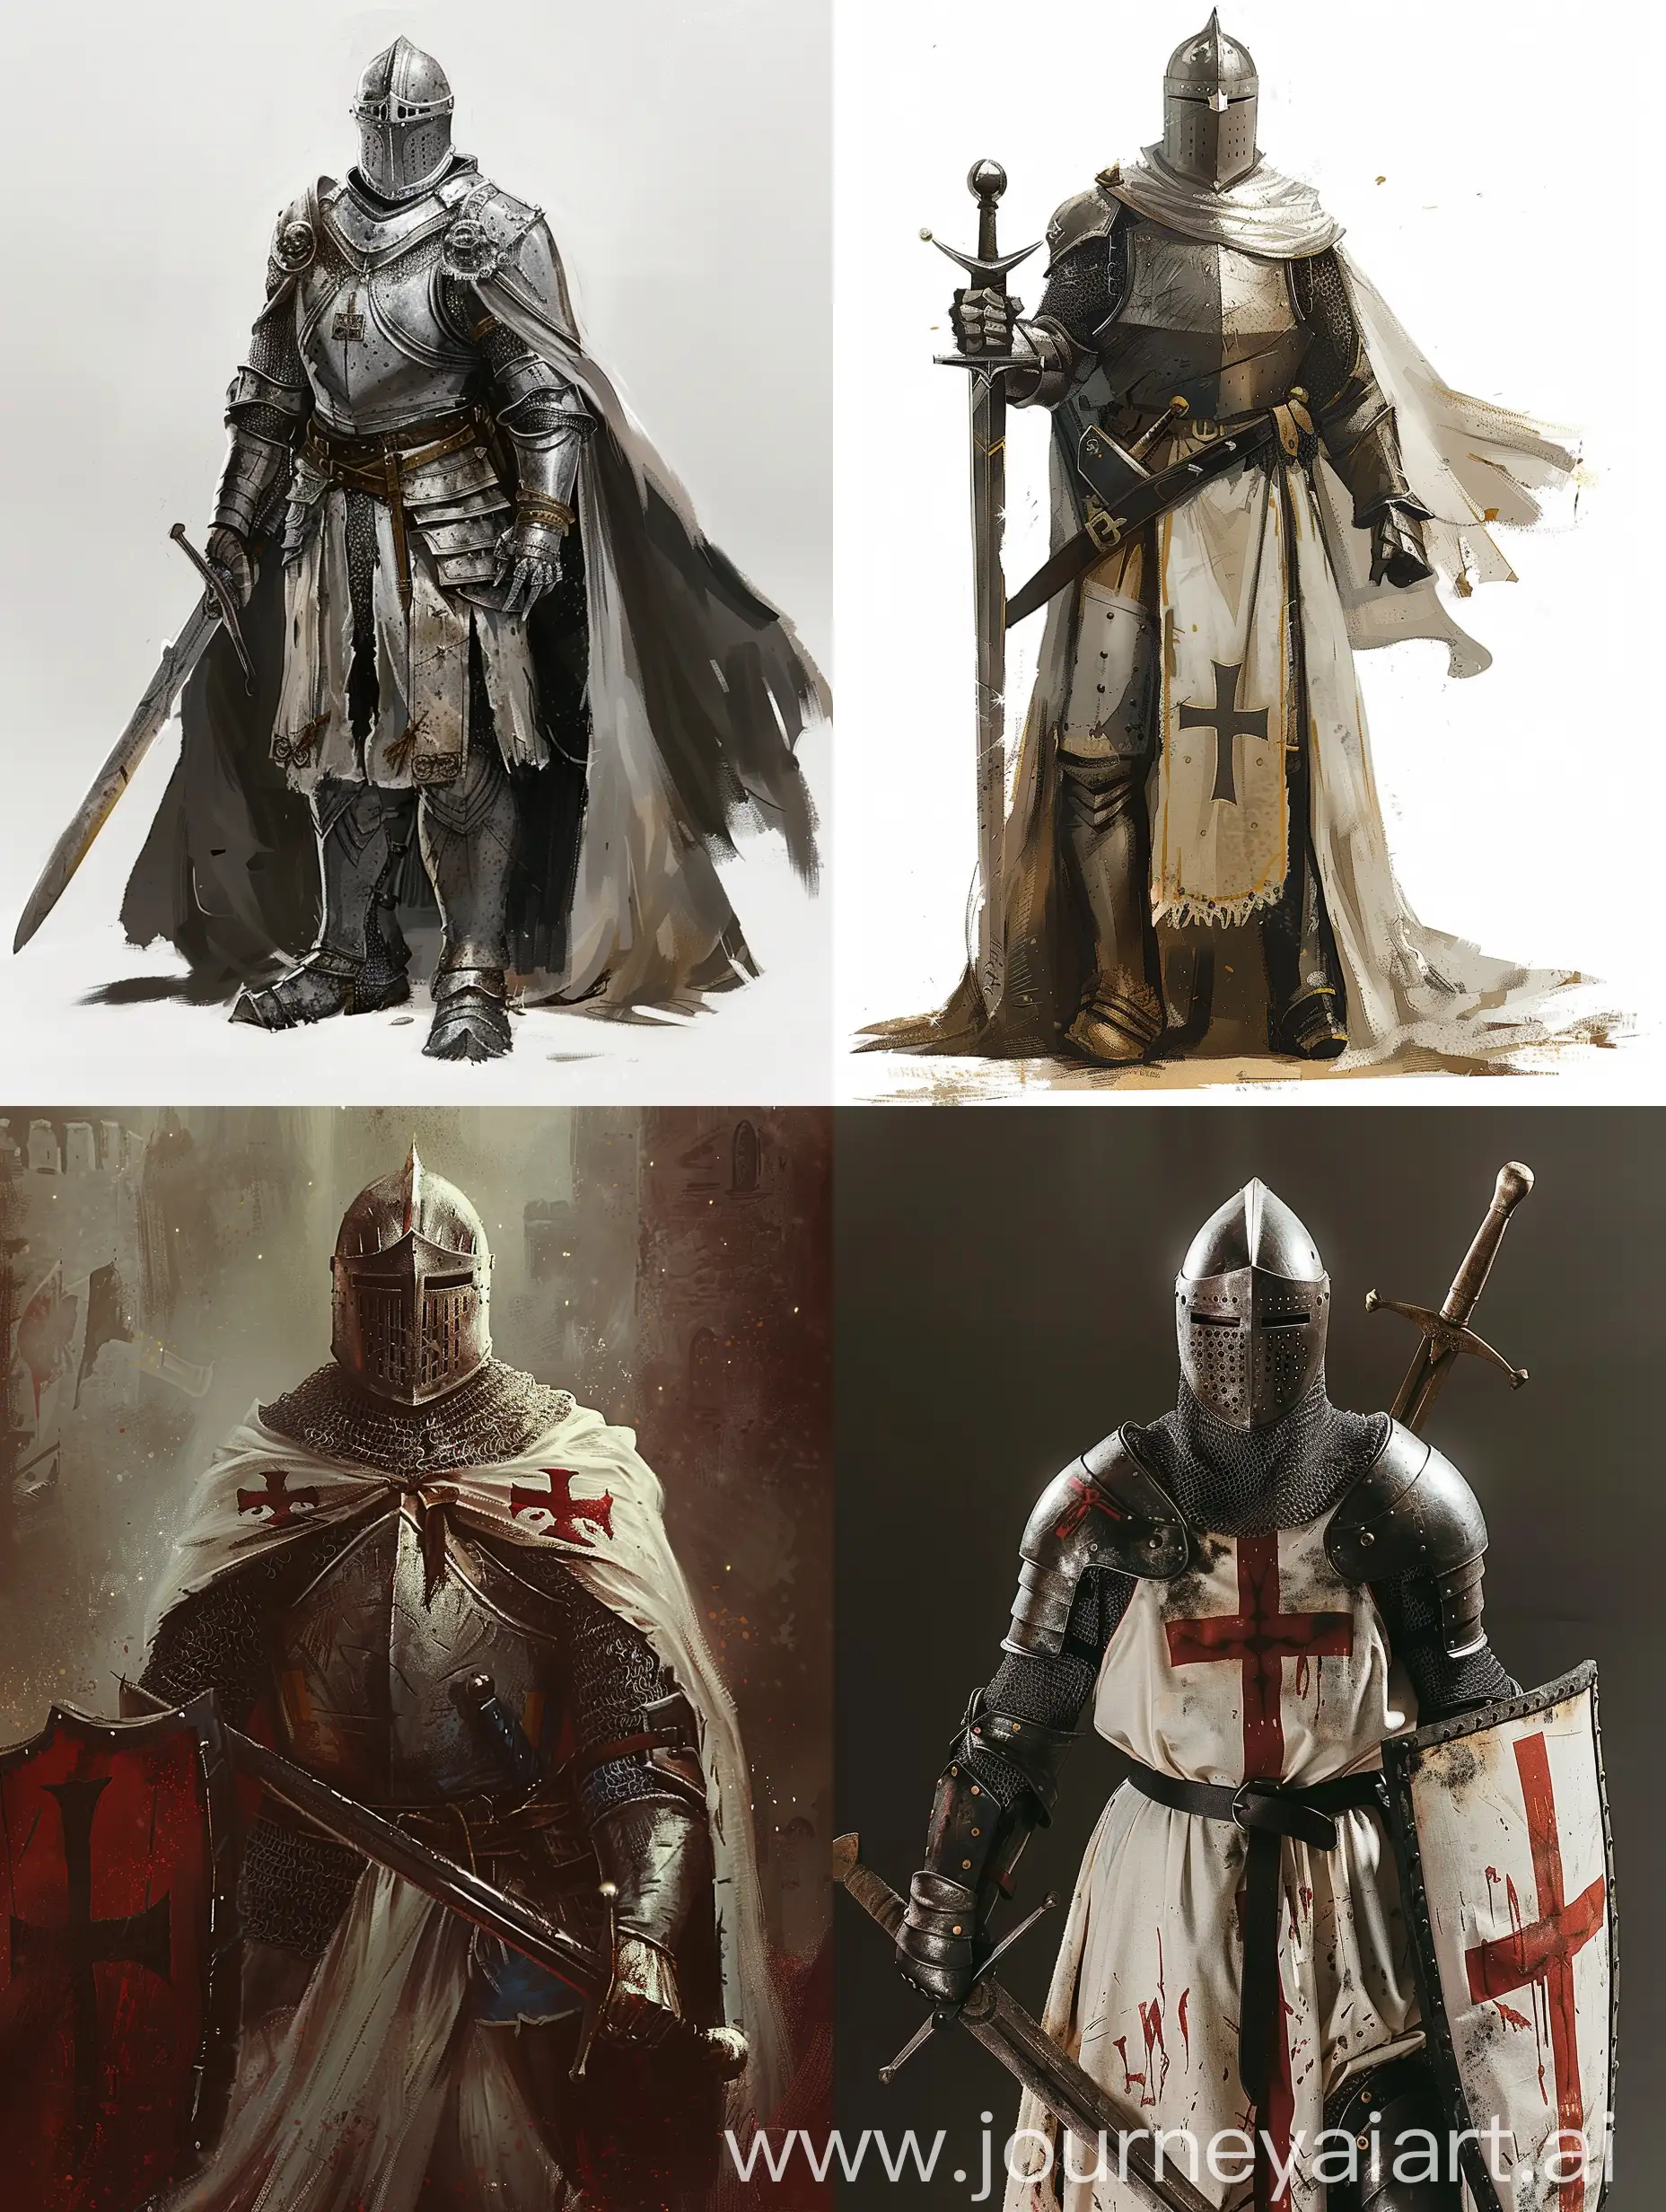 Medieval-Knight-on-Horseback-in-Battle